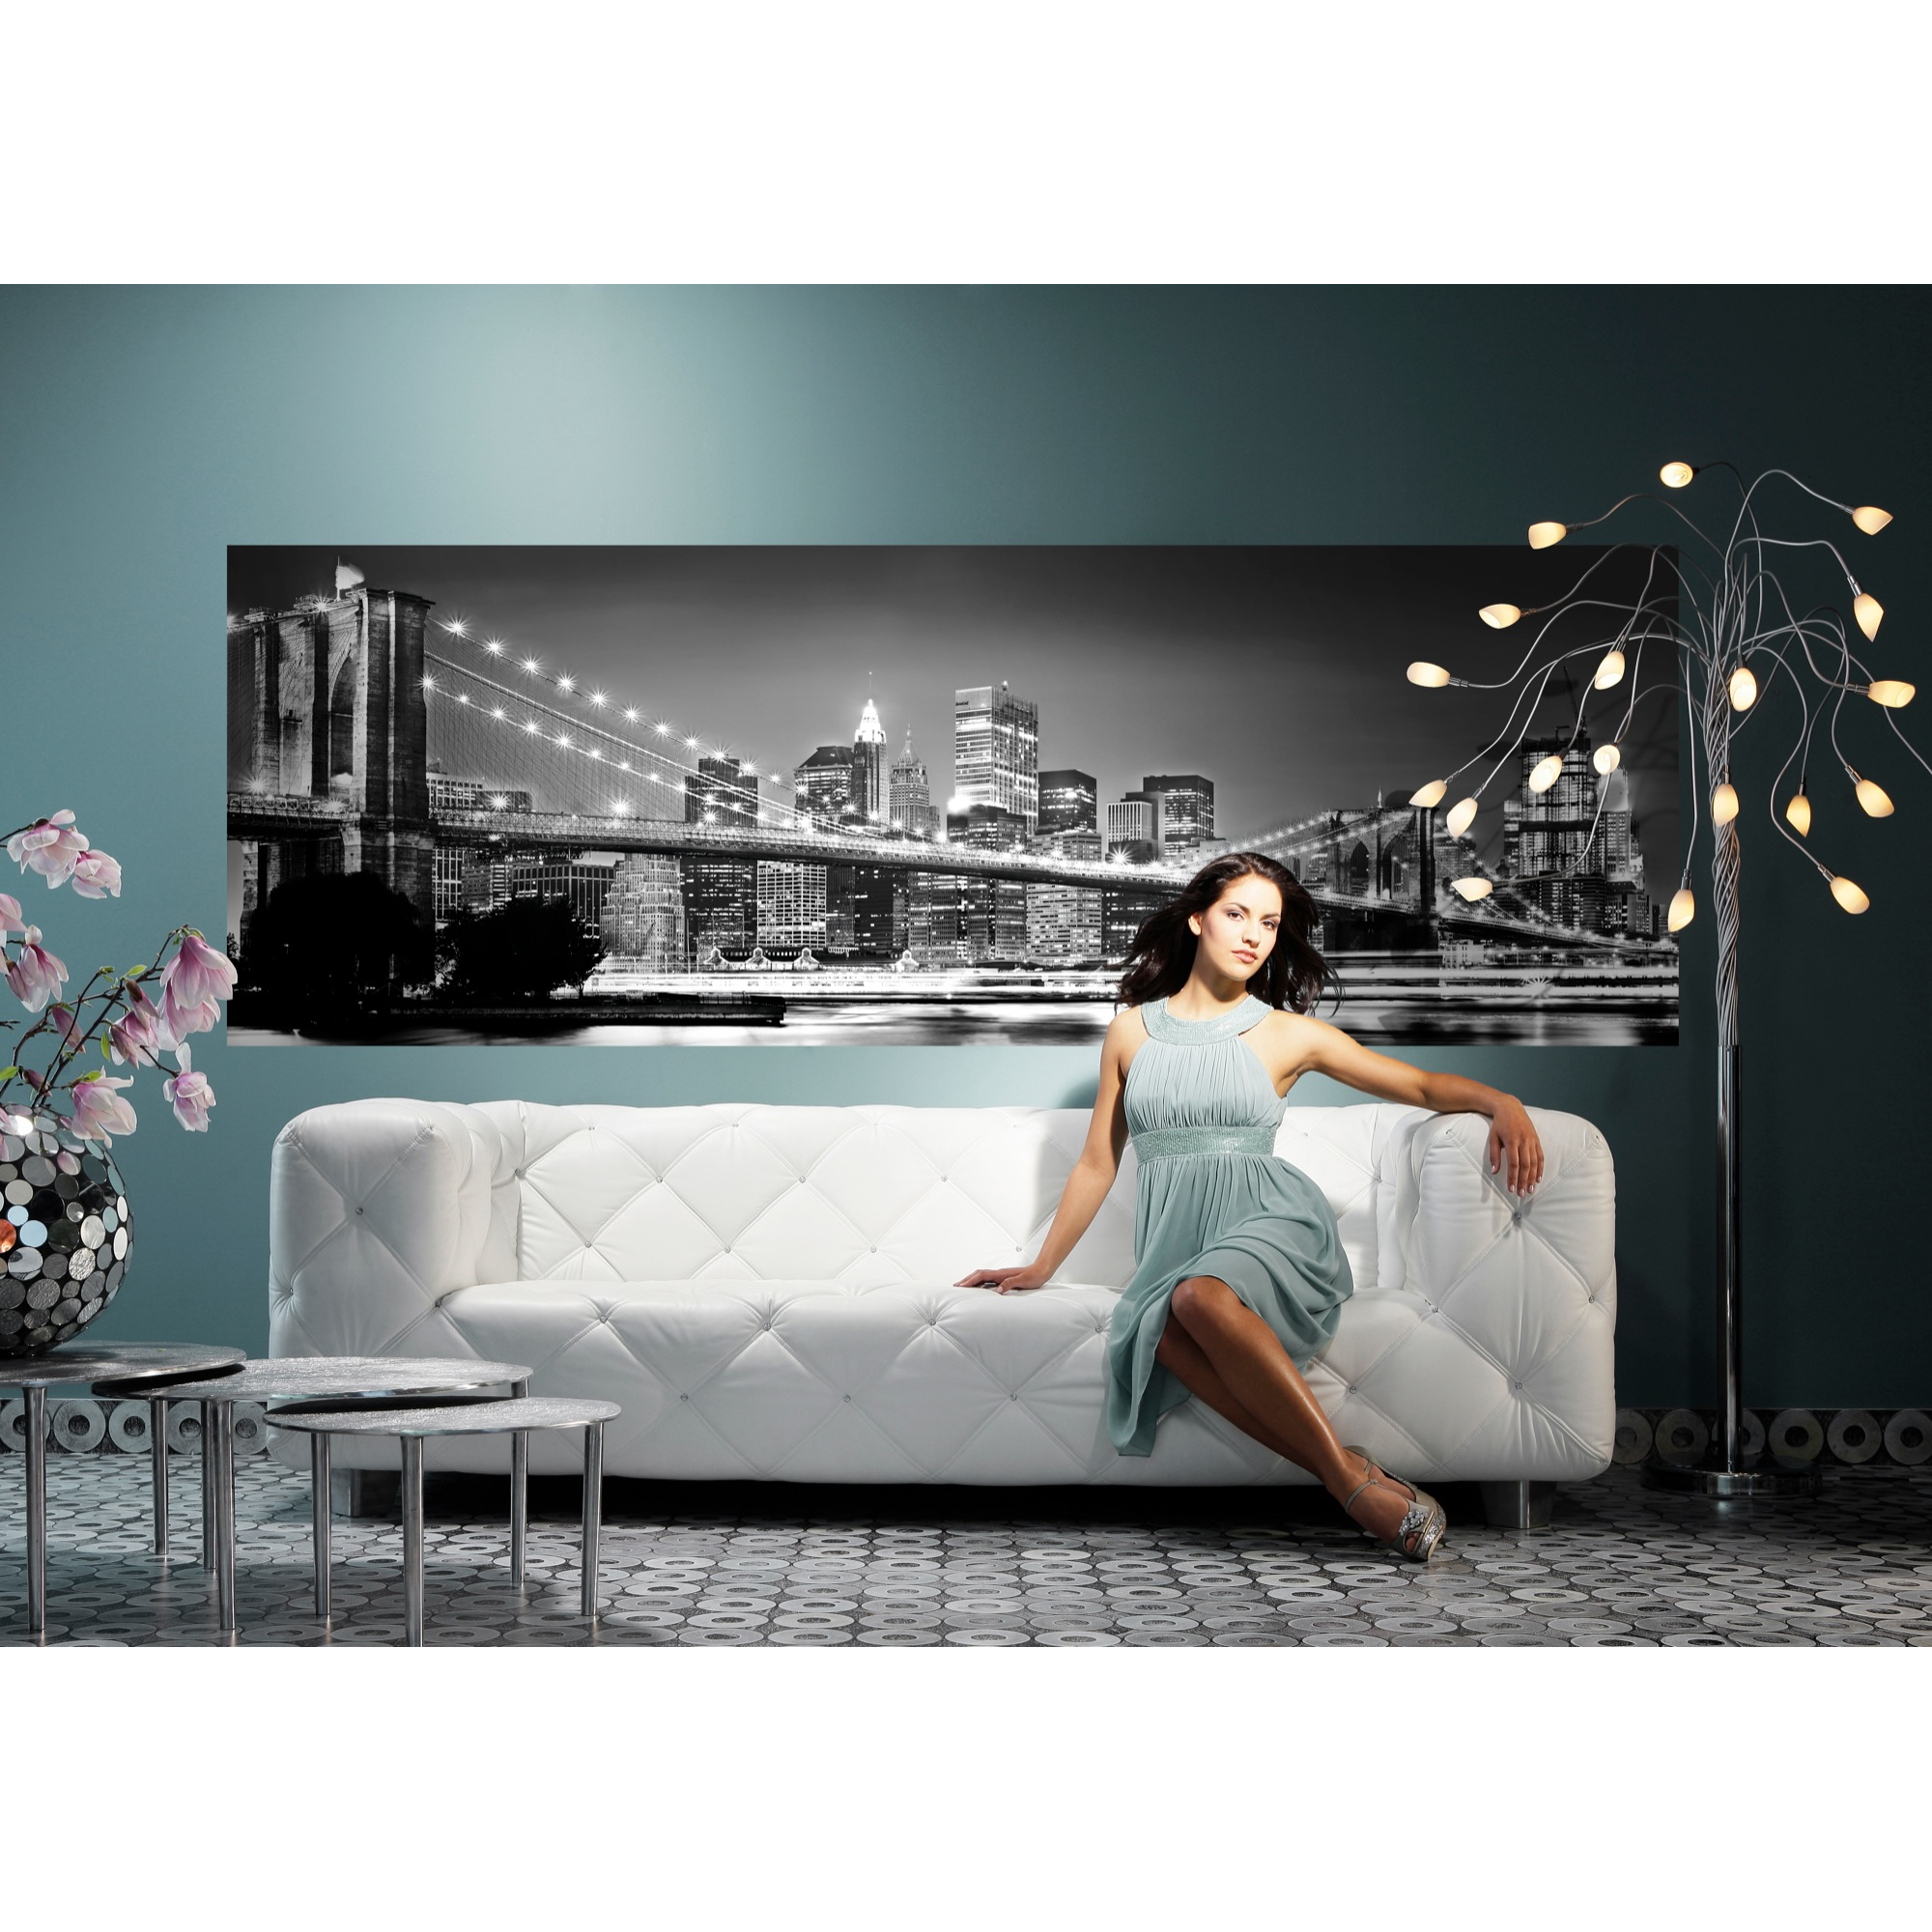 Vliesfototapete 'Brooklyn Bridge' 368 x 248 cm + product picture